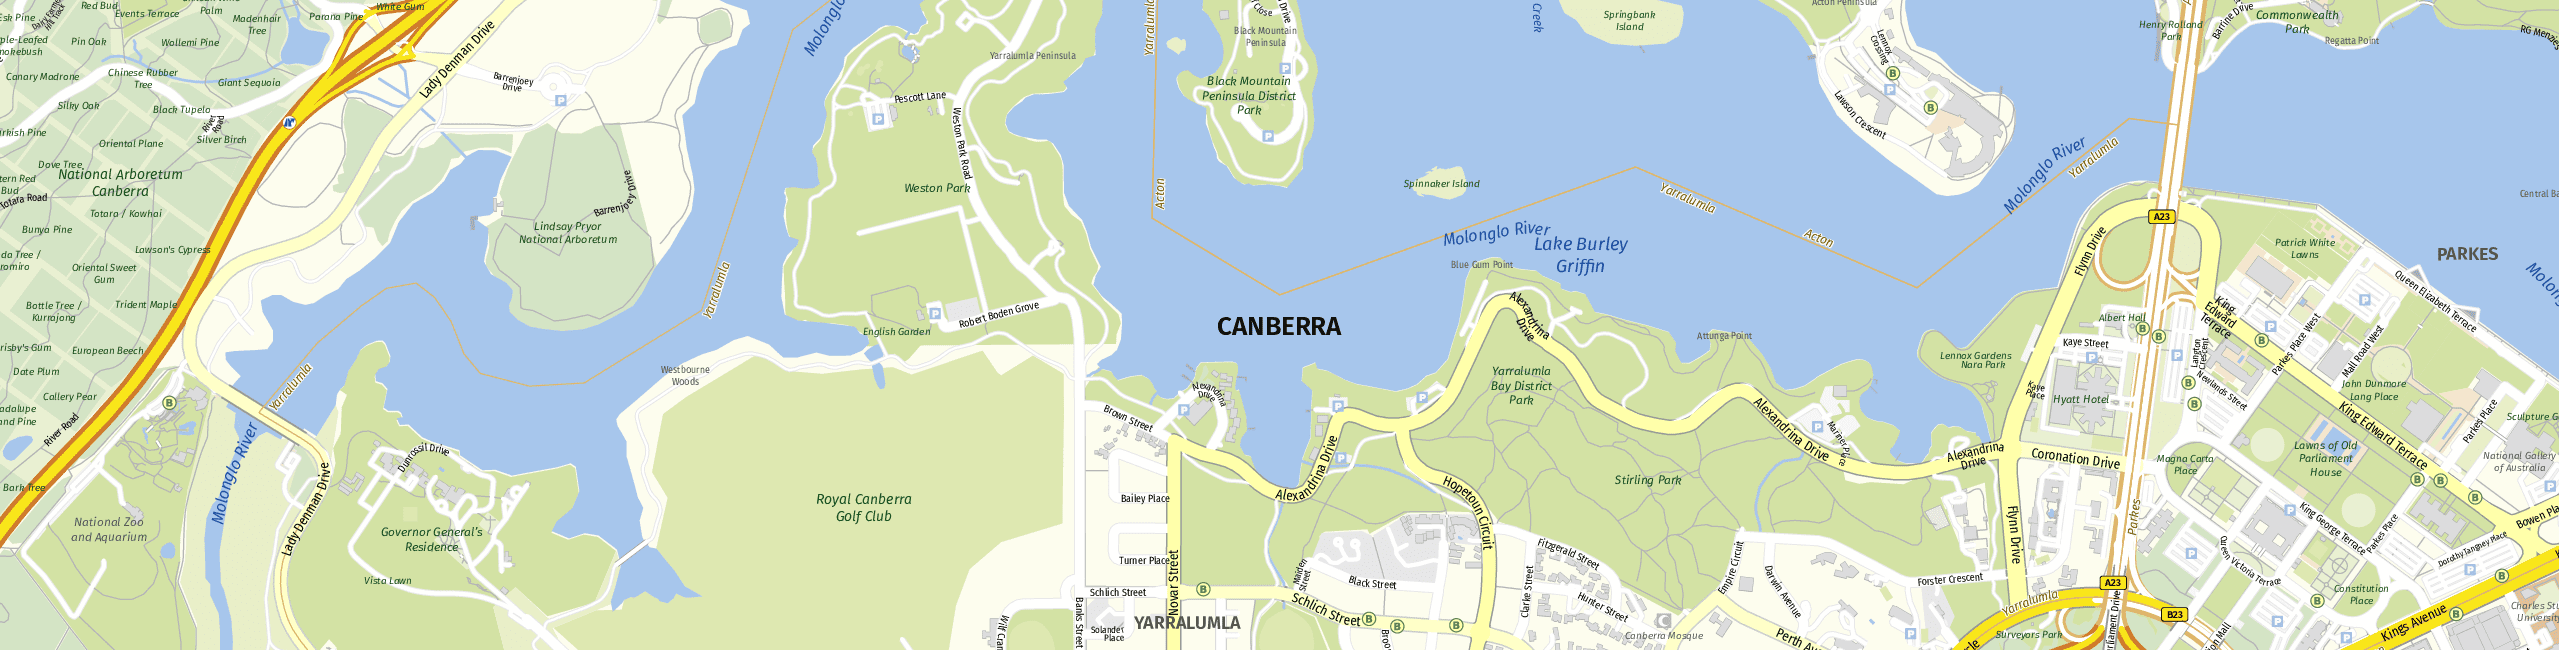 Stadtplan Canberra zum Downloaden.